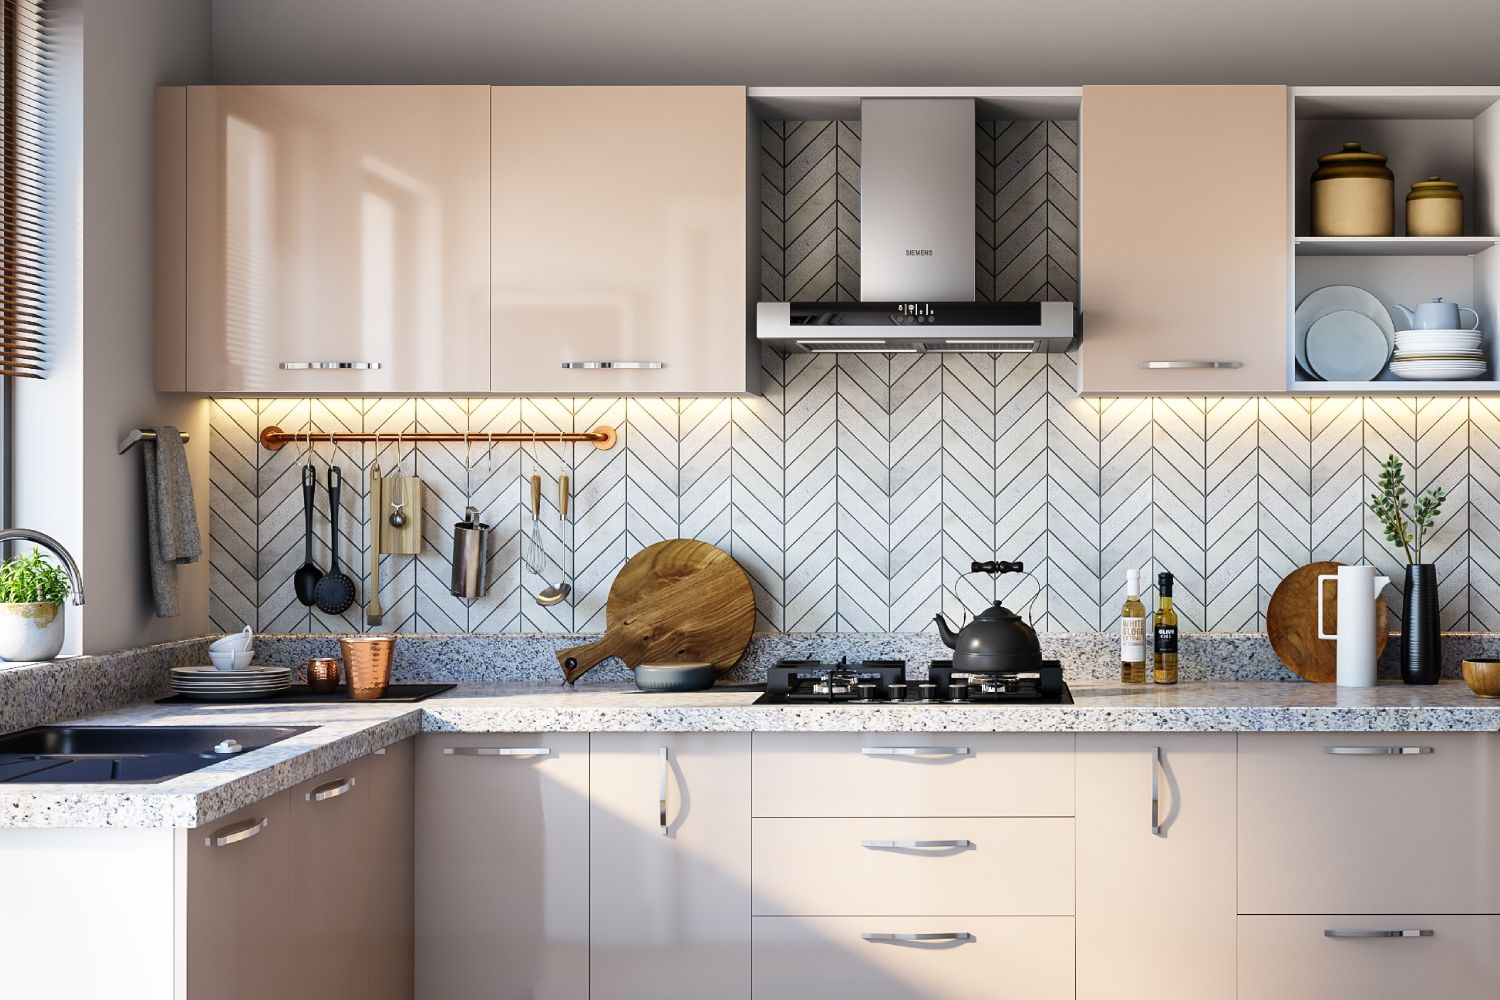 Modern Herringbone Ceramic Kitchen Tile Design In Grey And White